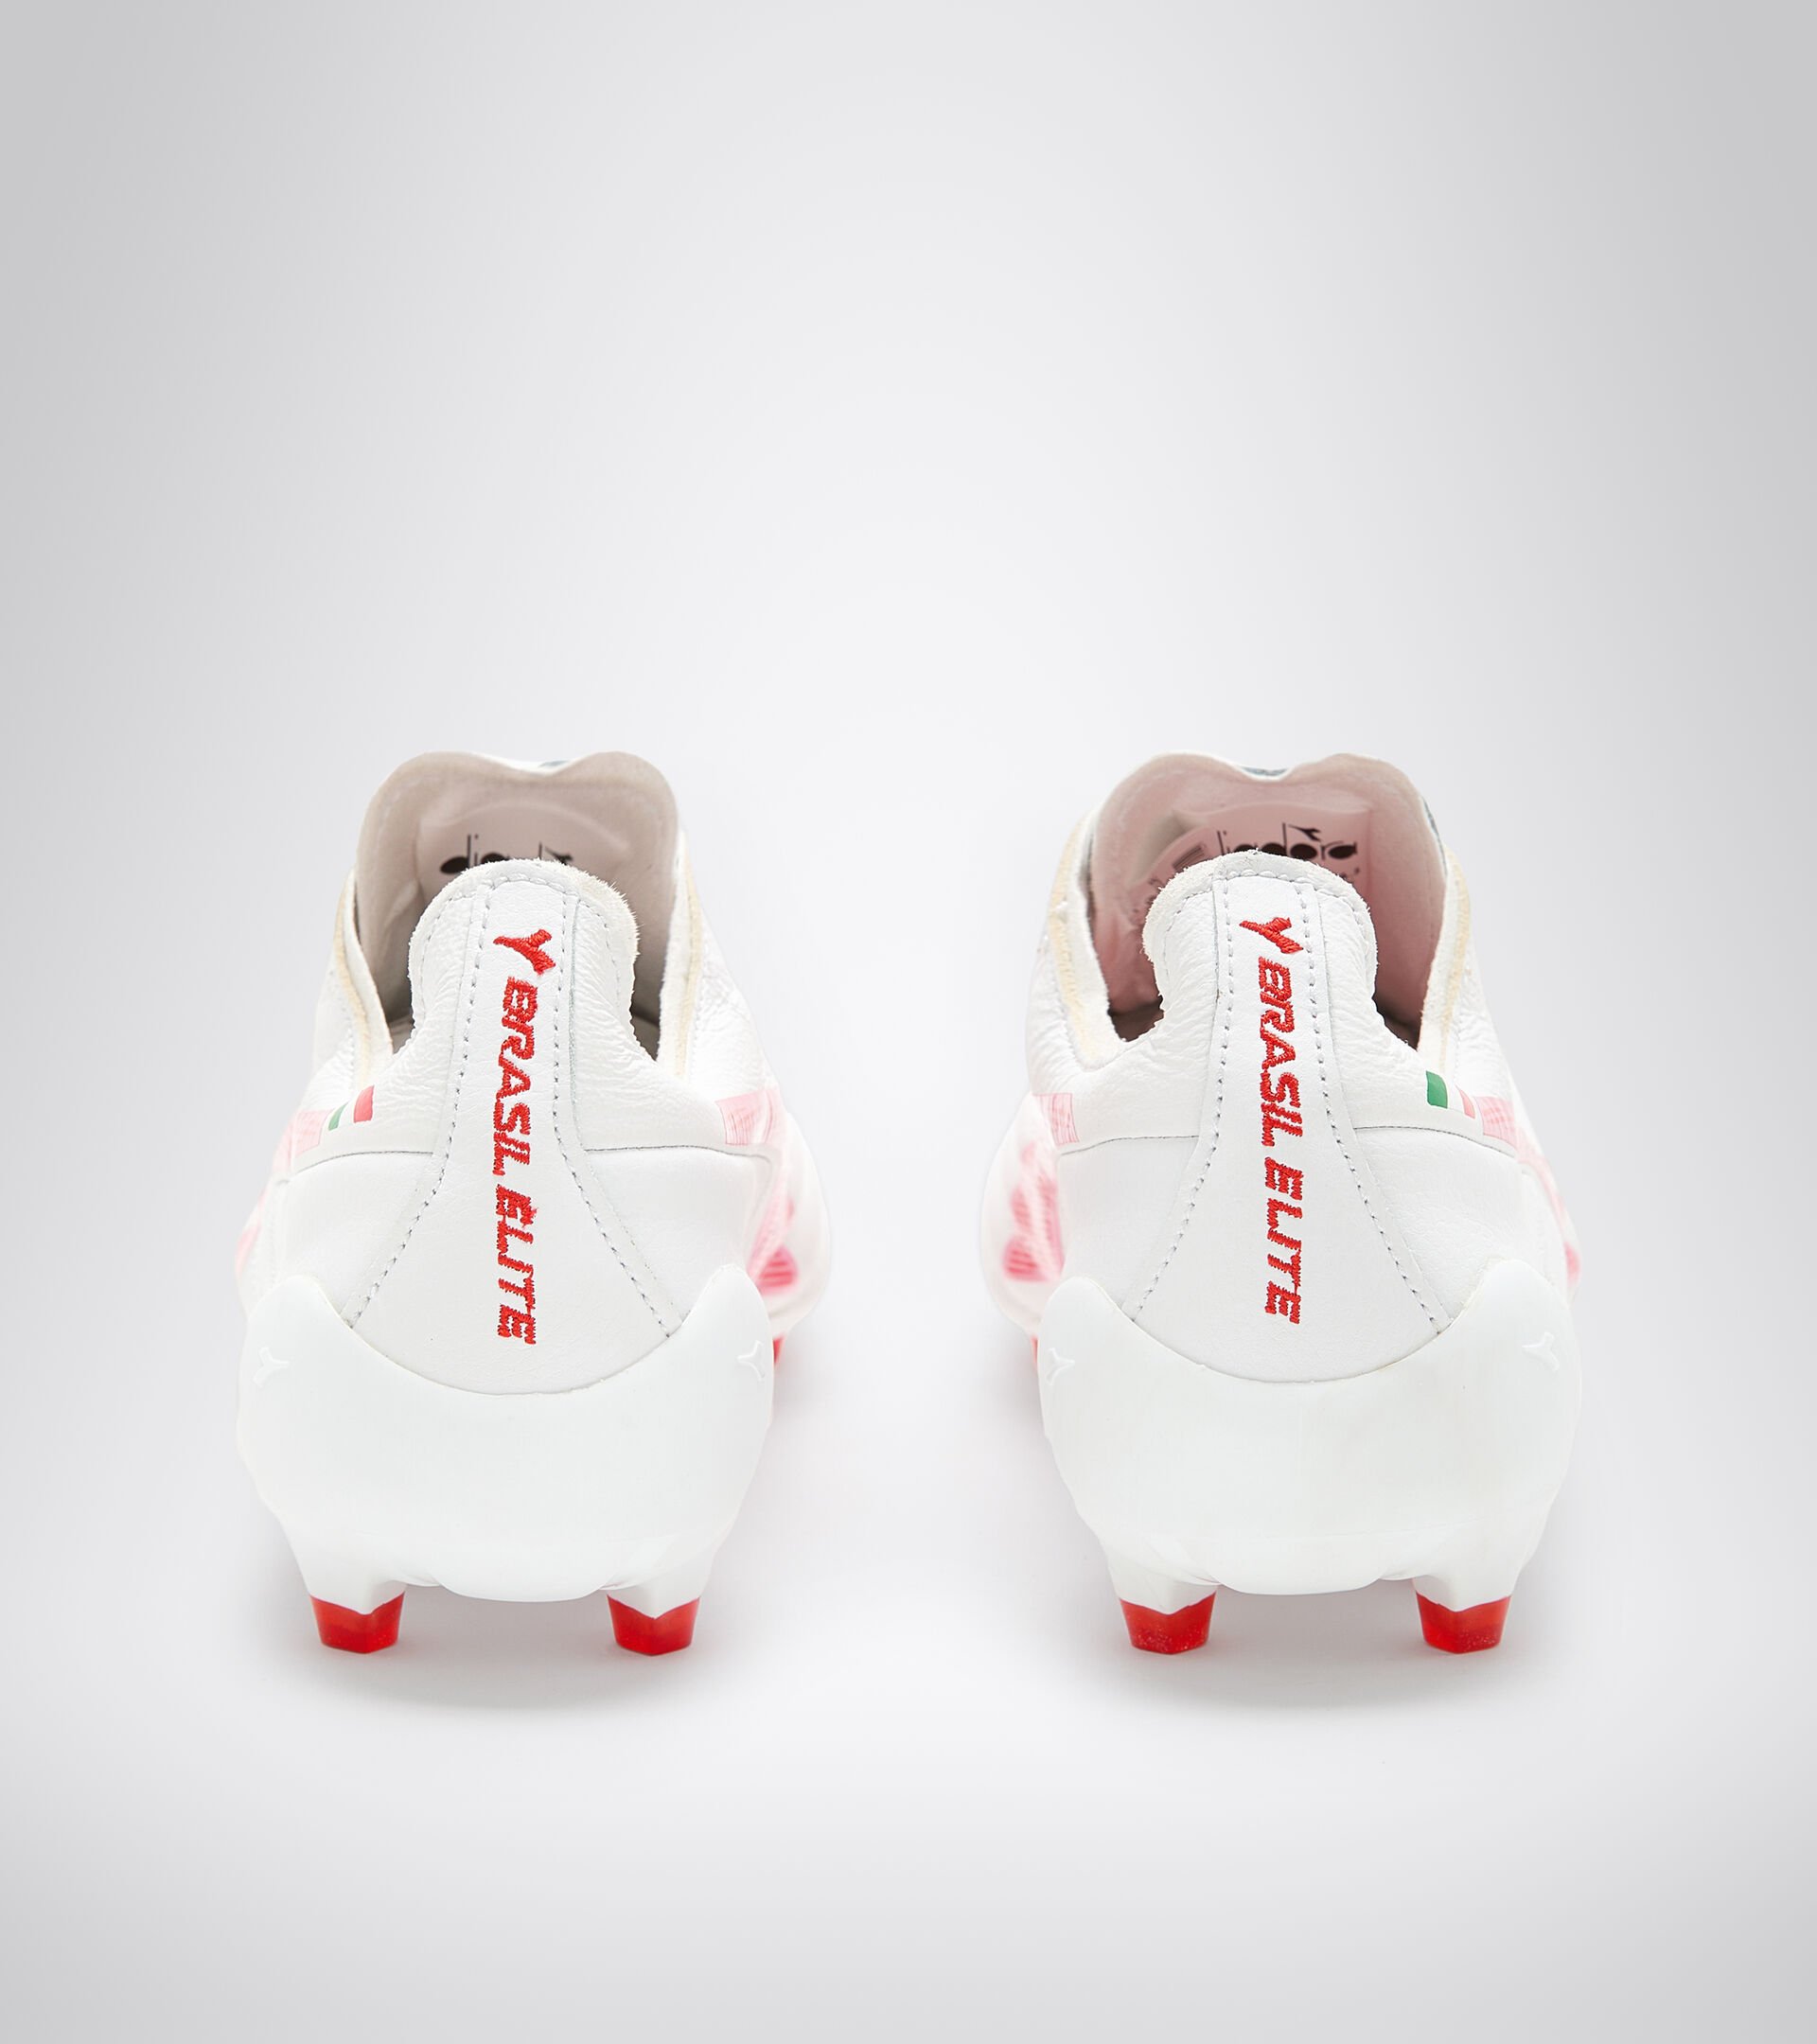 Football boots Made in Italy - Men BRASIL ELITE2 TECH ITA LPX WHITE/MILANO RED - Diadora